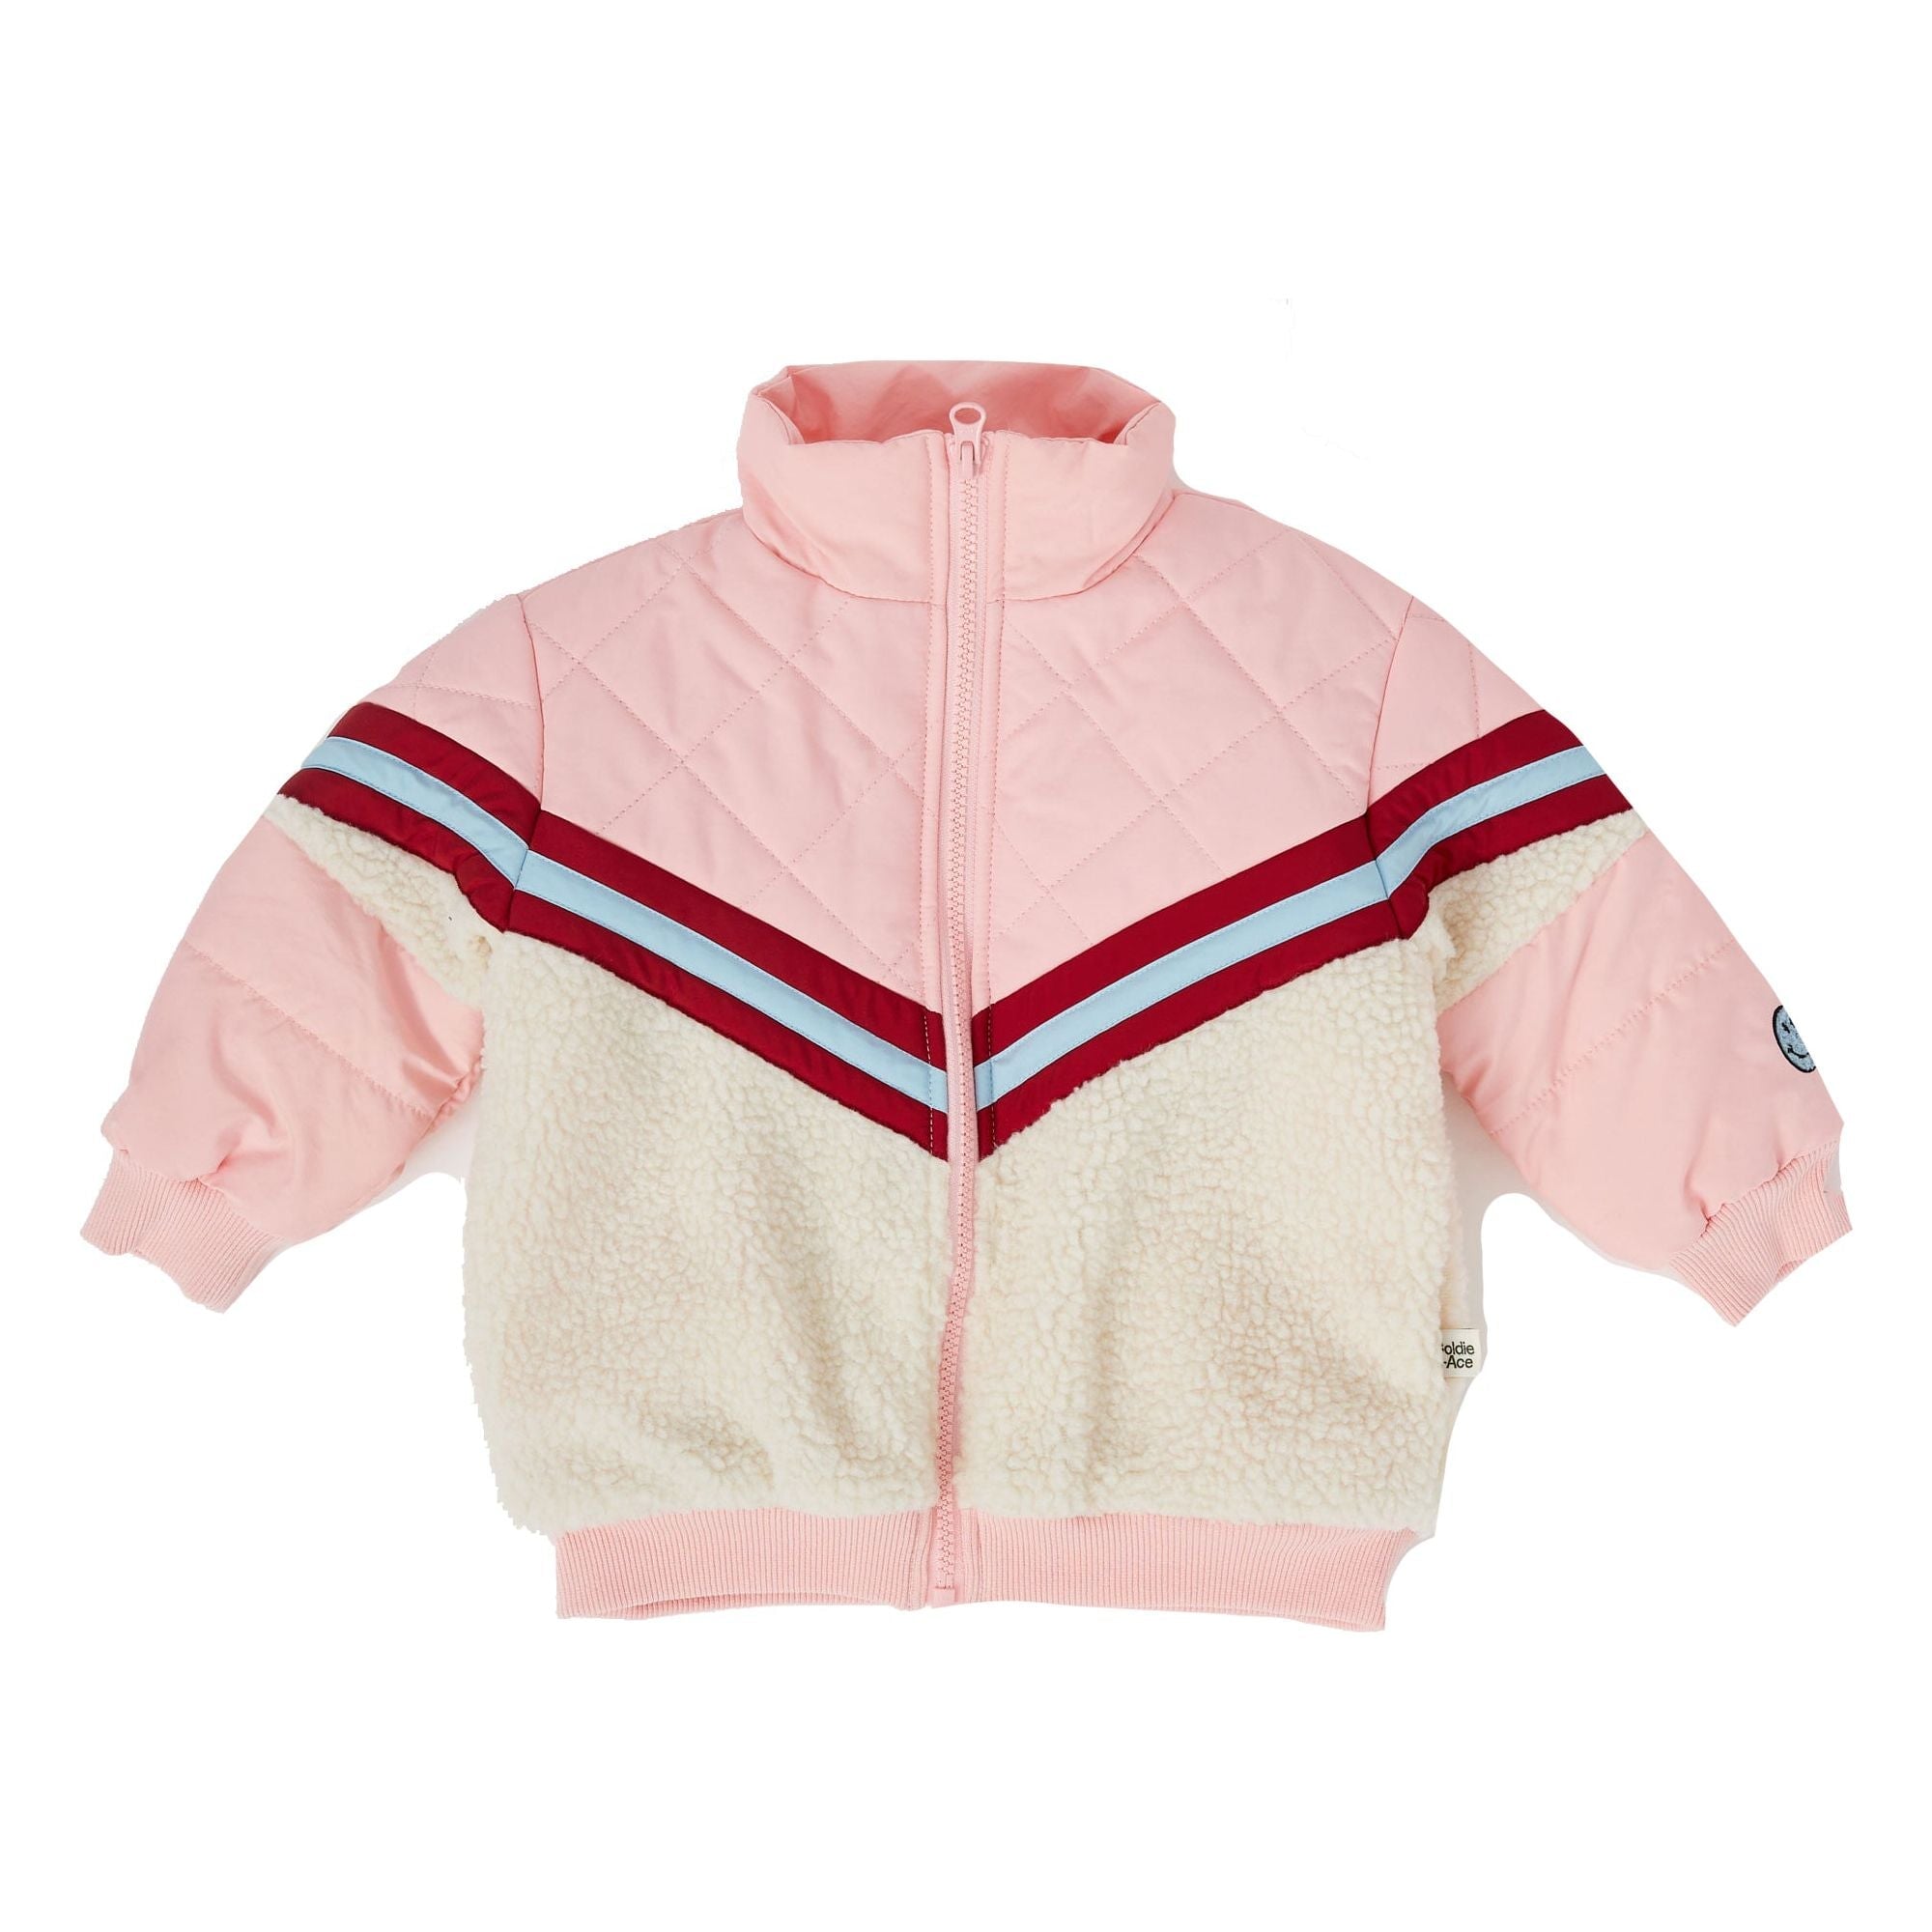 Kobe Shearling Jacket - Tulip Pink